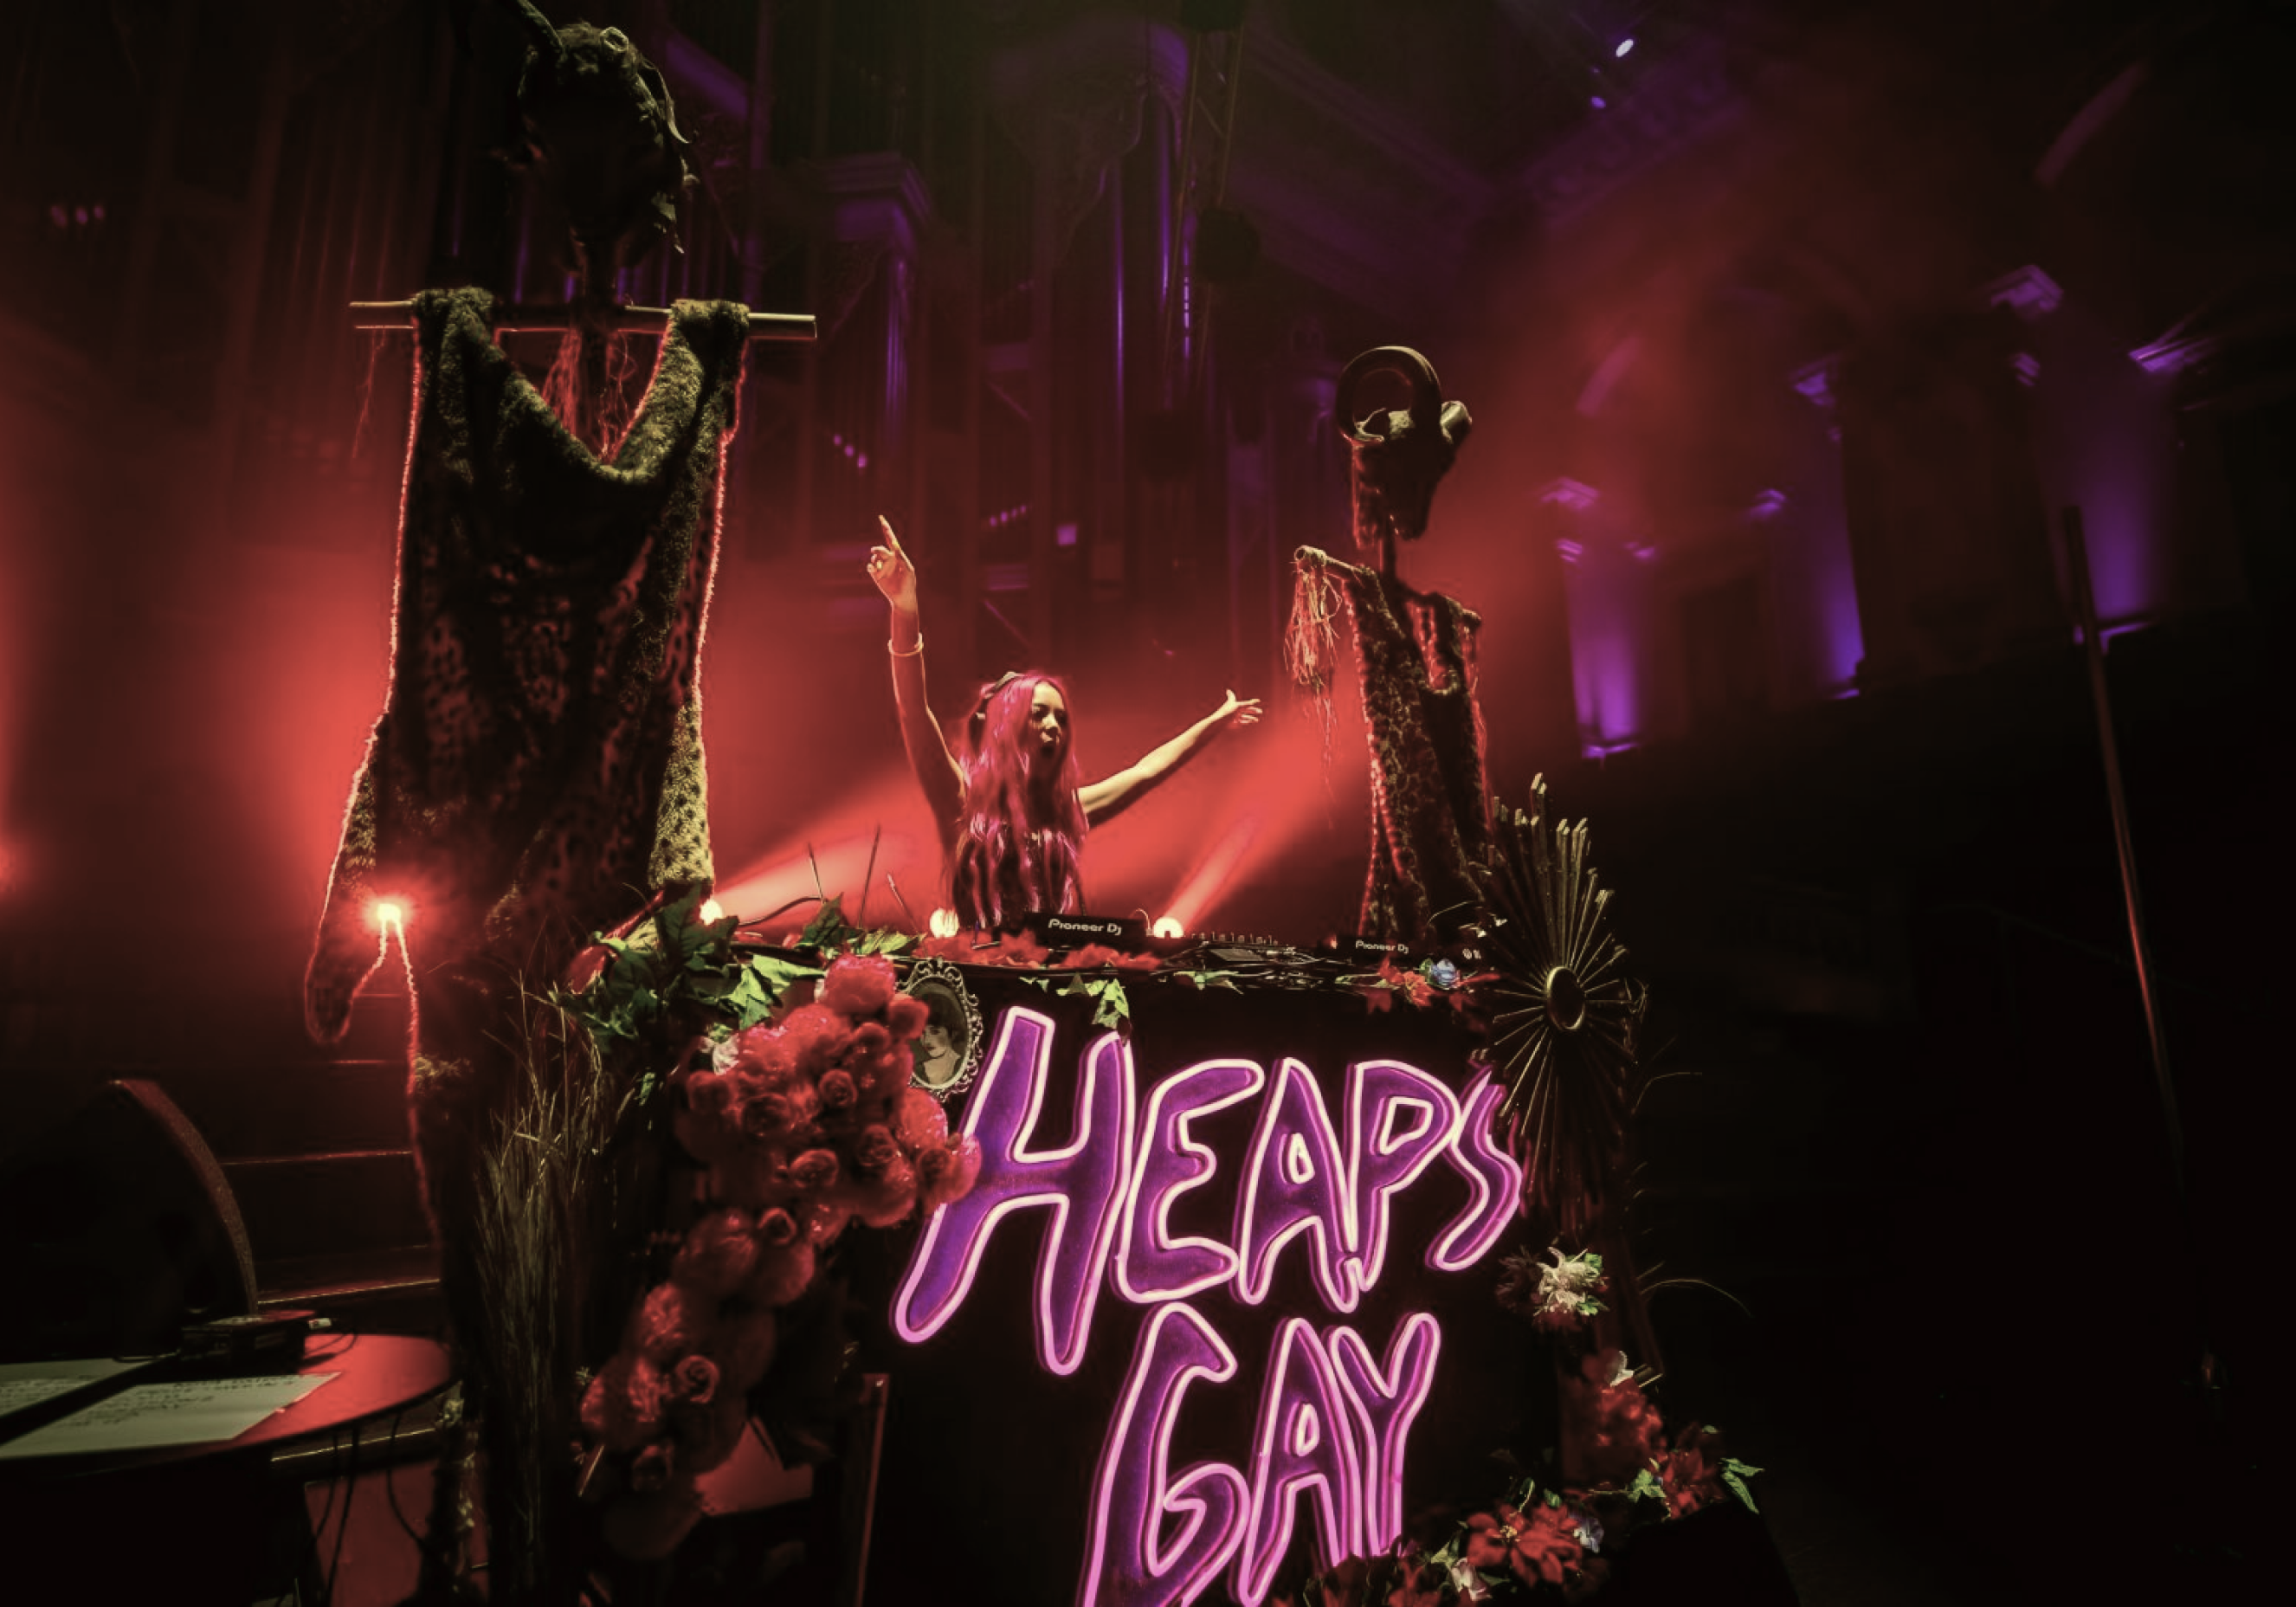 Heaps Gay Qweens Ball during Vivid Sydney 2019 